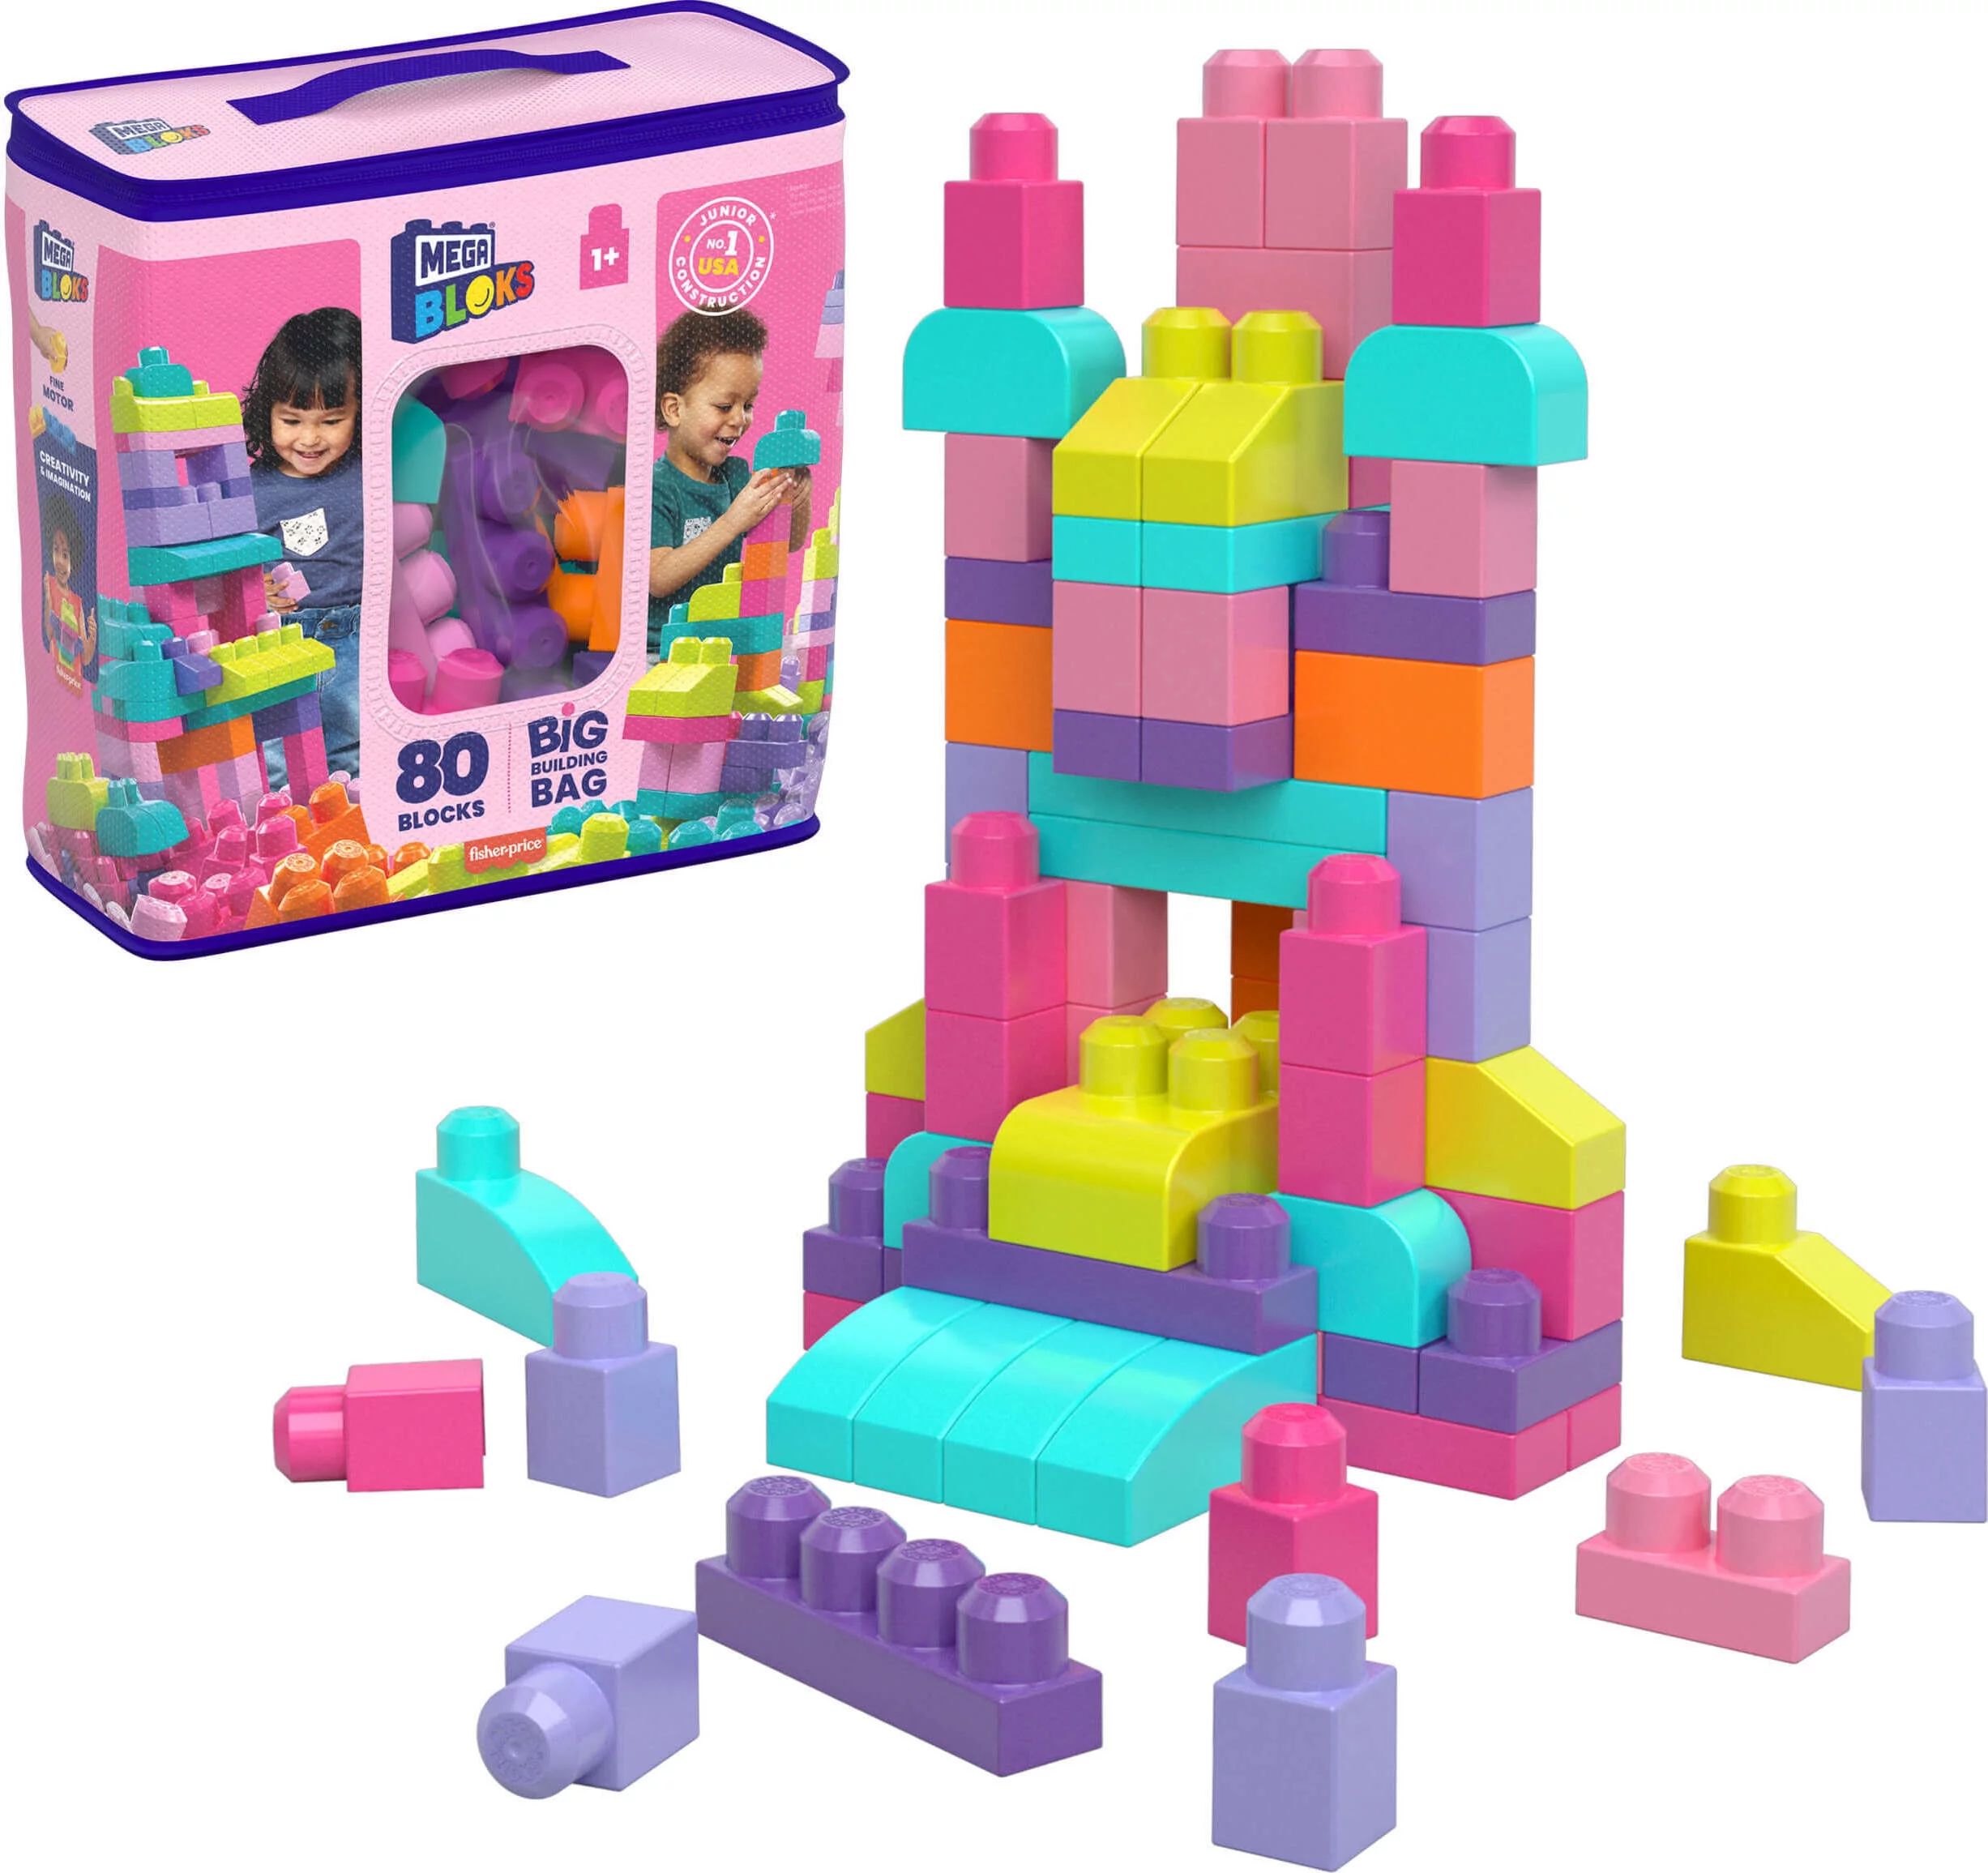 MEGA BLOKS Fisher-Price Toy Blocks Pink Big Building Bag With Storage (80 Pieces) For Toddler - W... | Walmart (US)